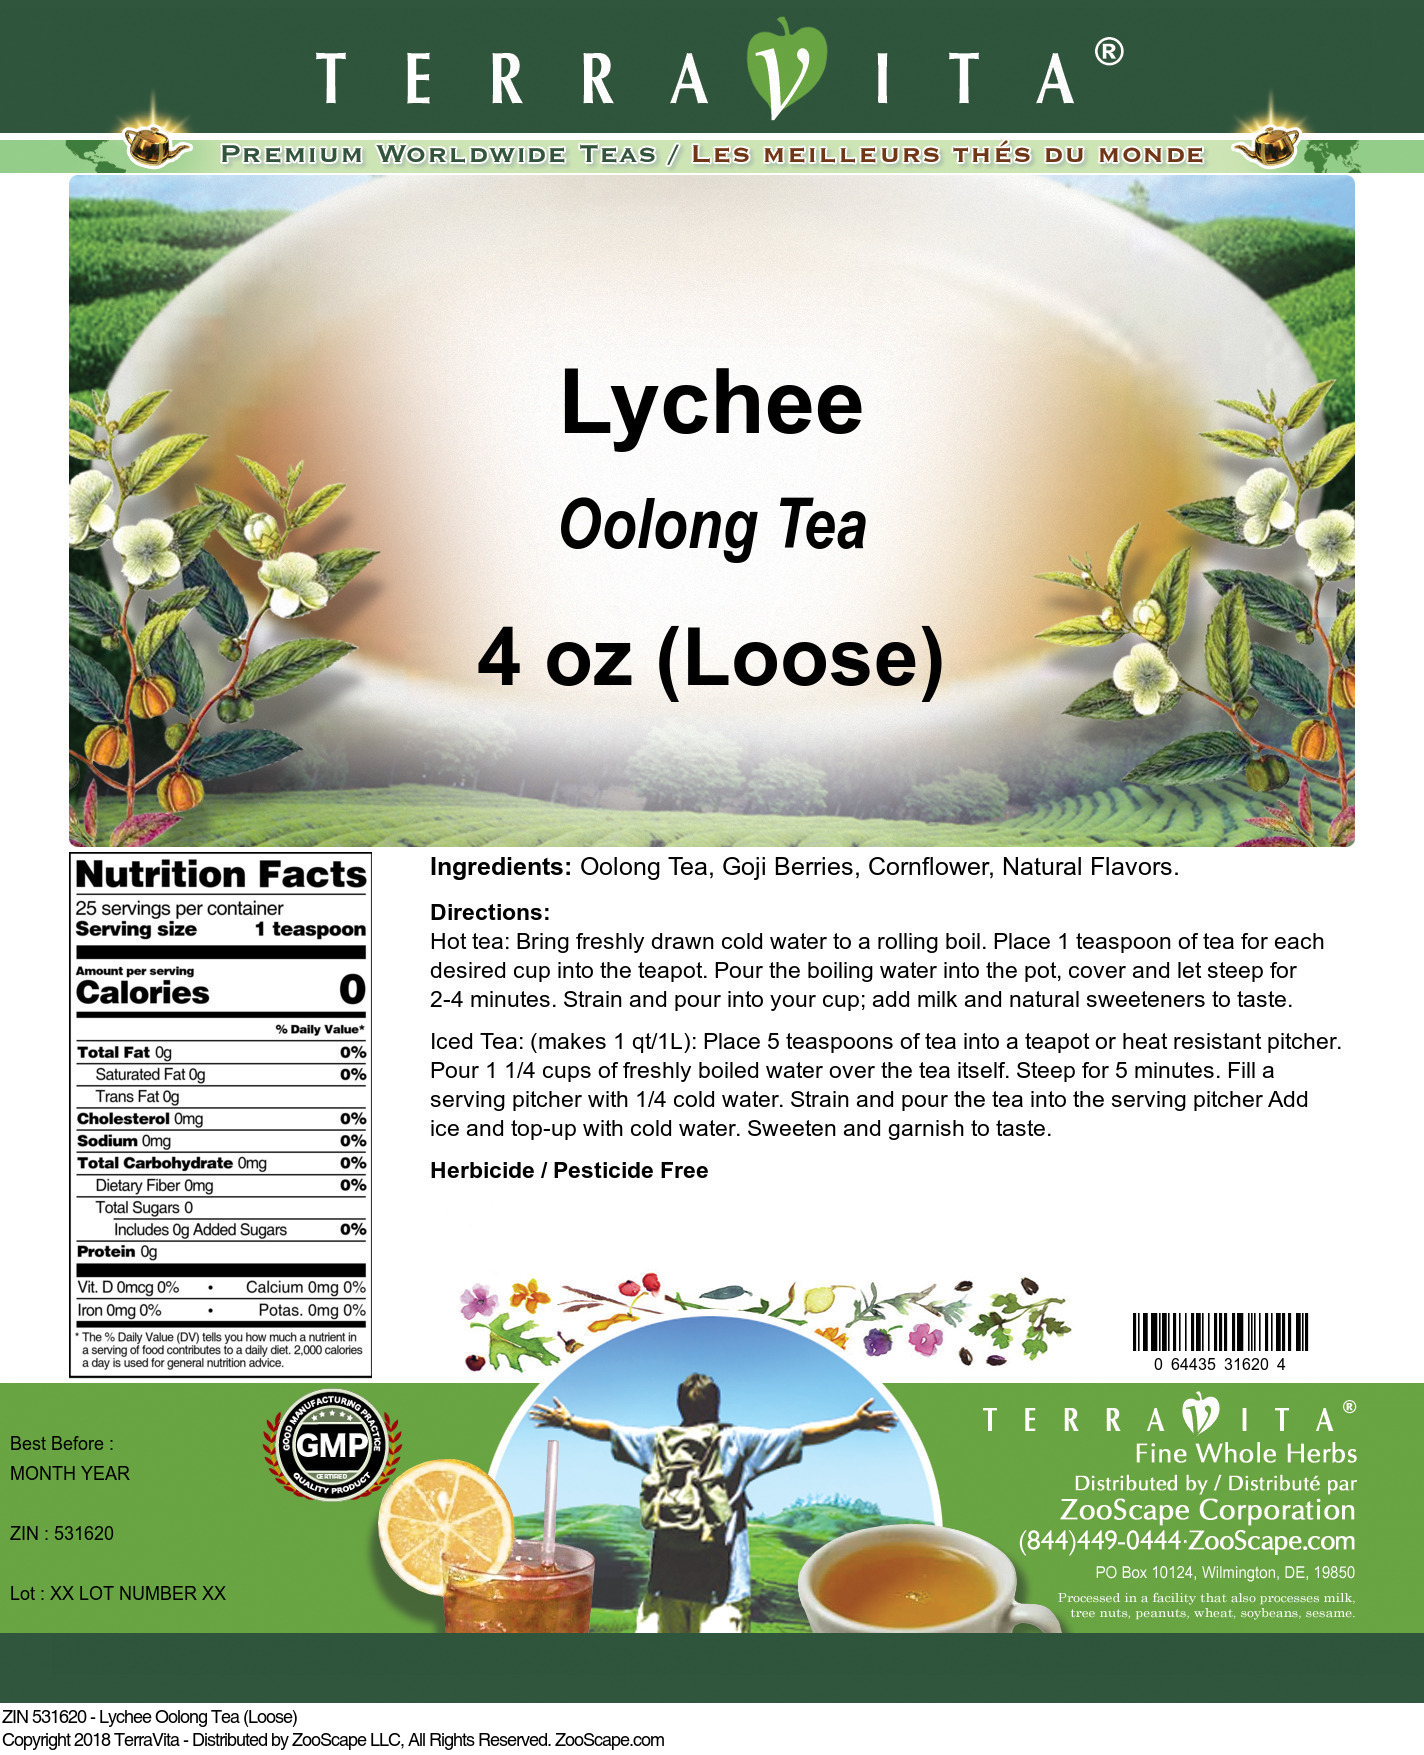 Lychee Oolong Tea (Loose) - Label